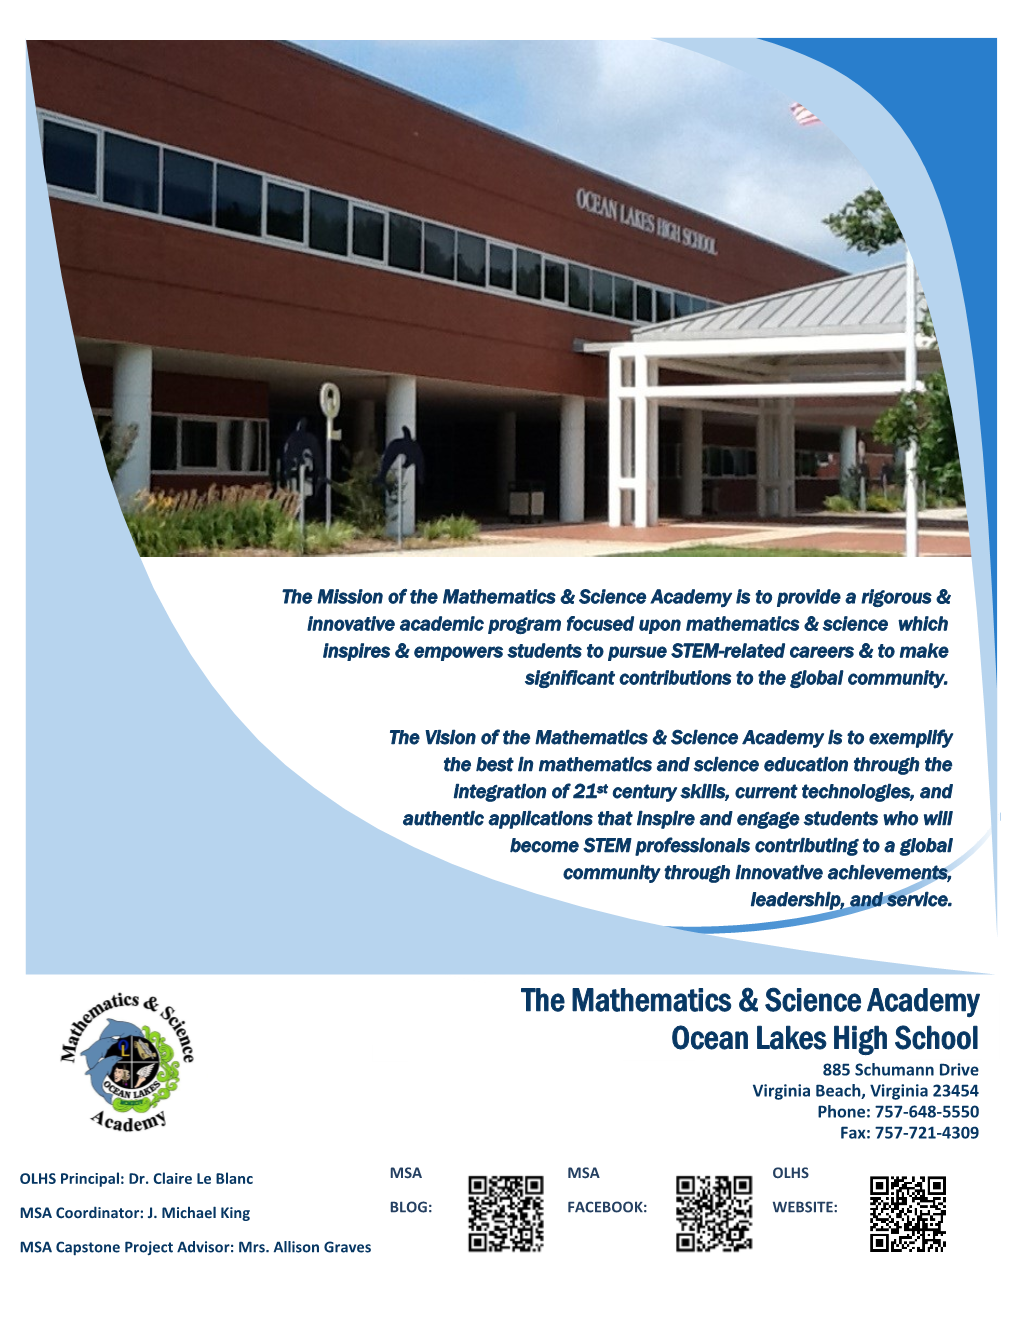 The Mathematics & Science Academy Ocean Lakes High School